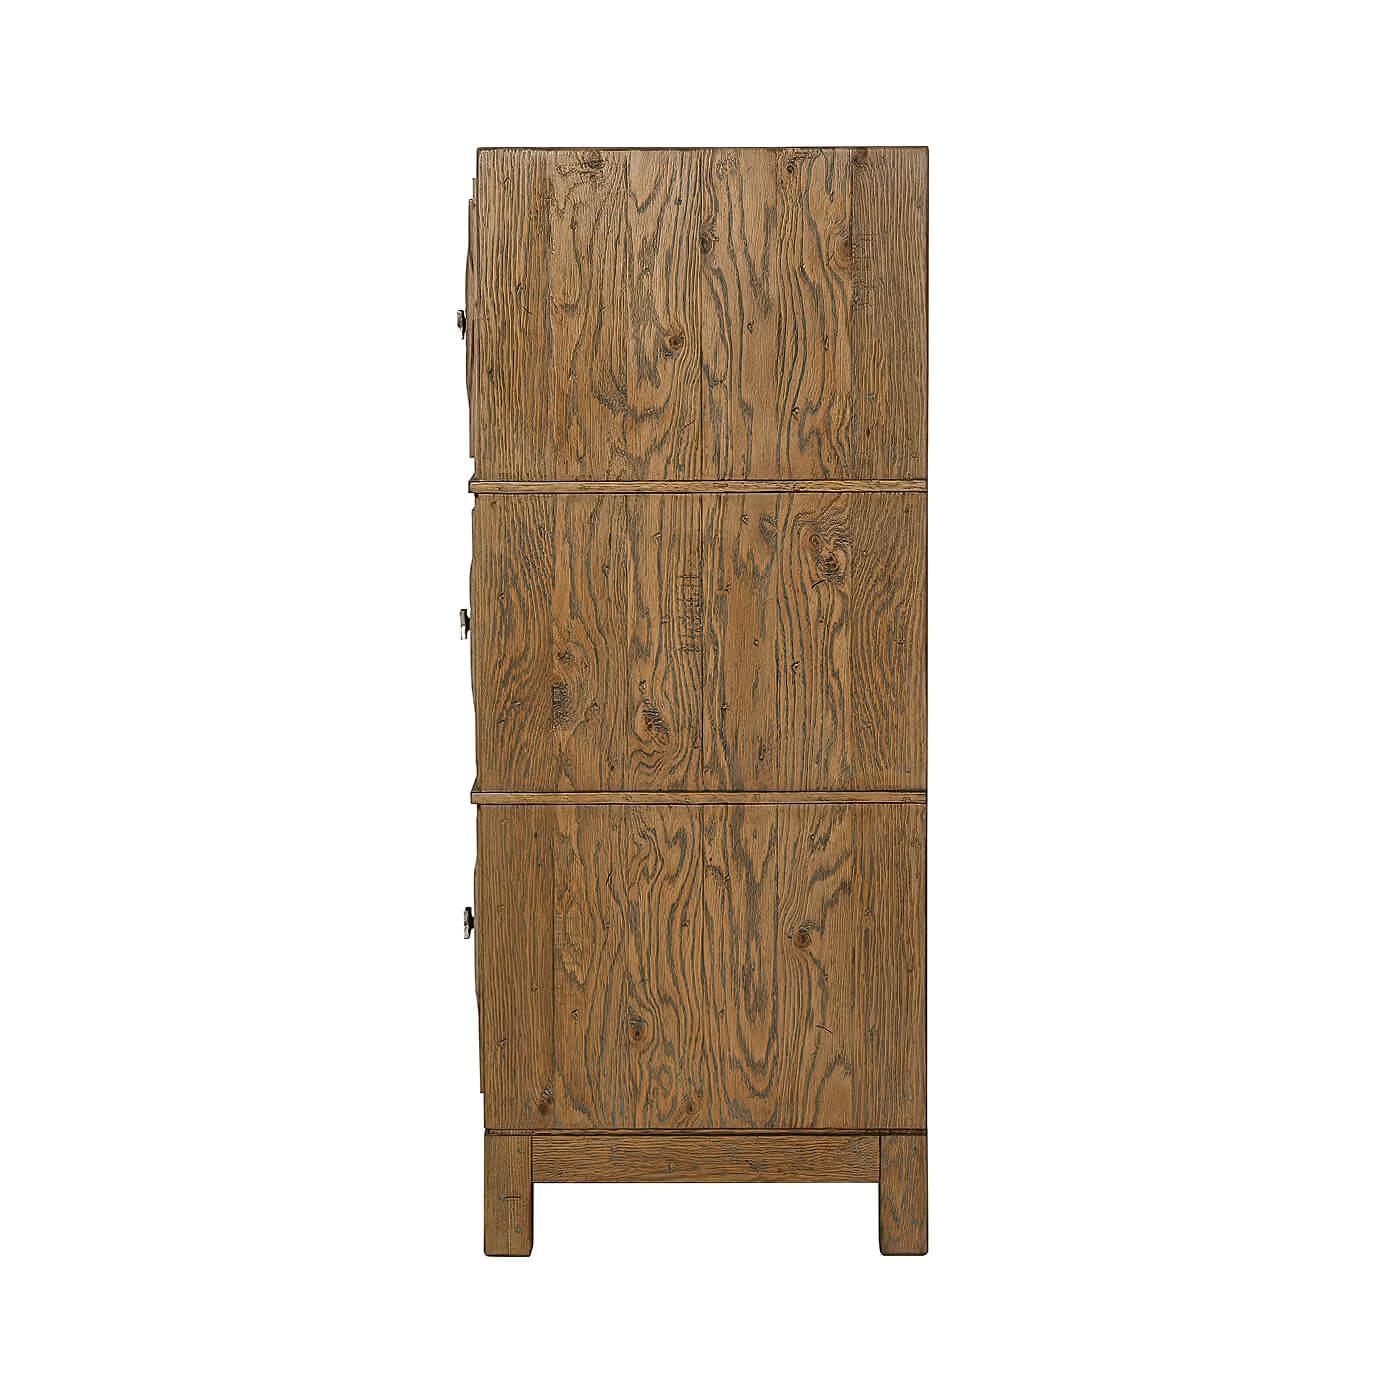 European Modern Rustic Oak Parquetry Dresser